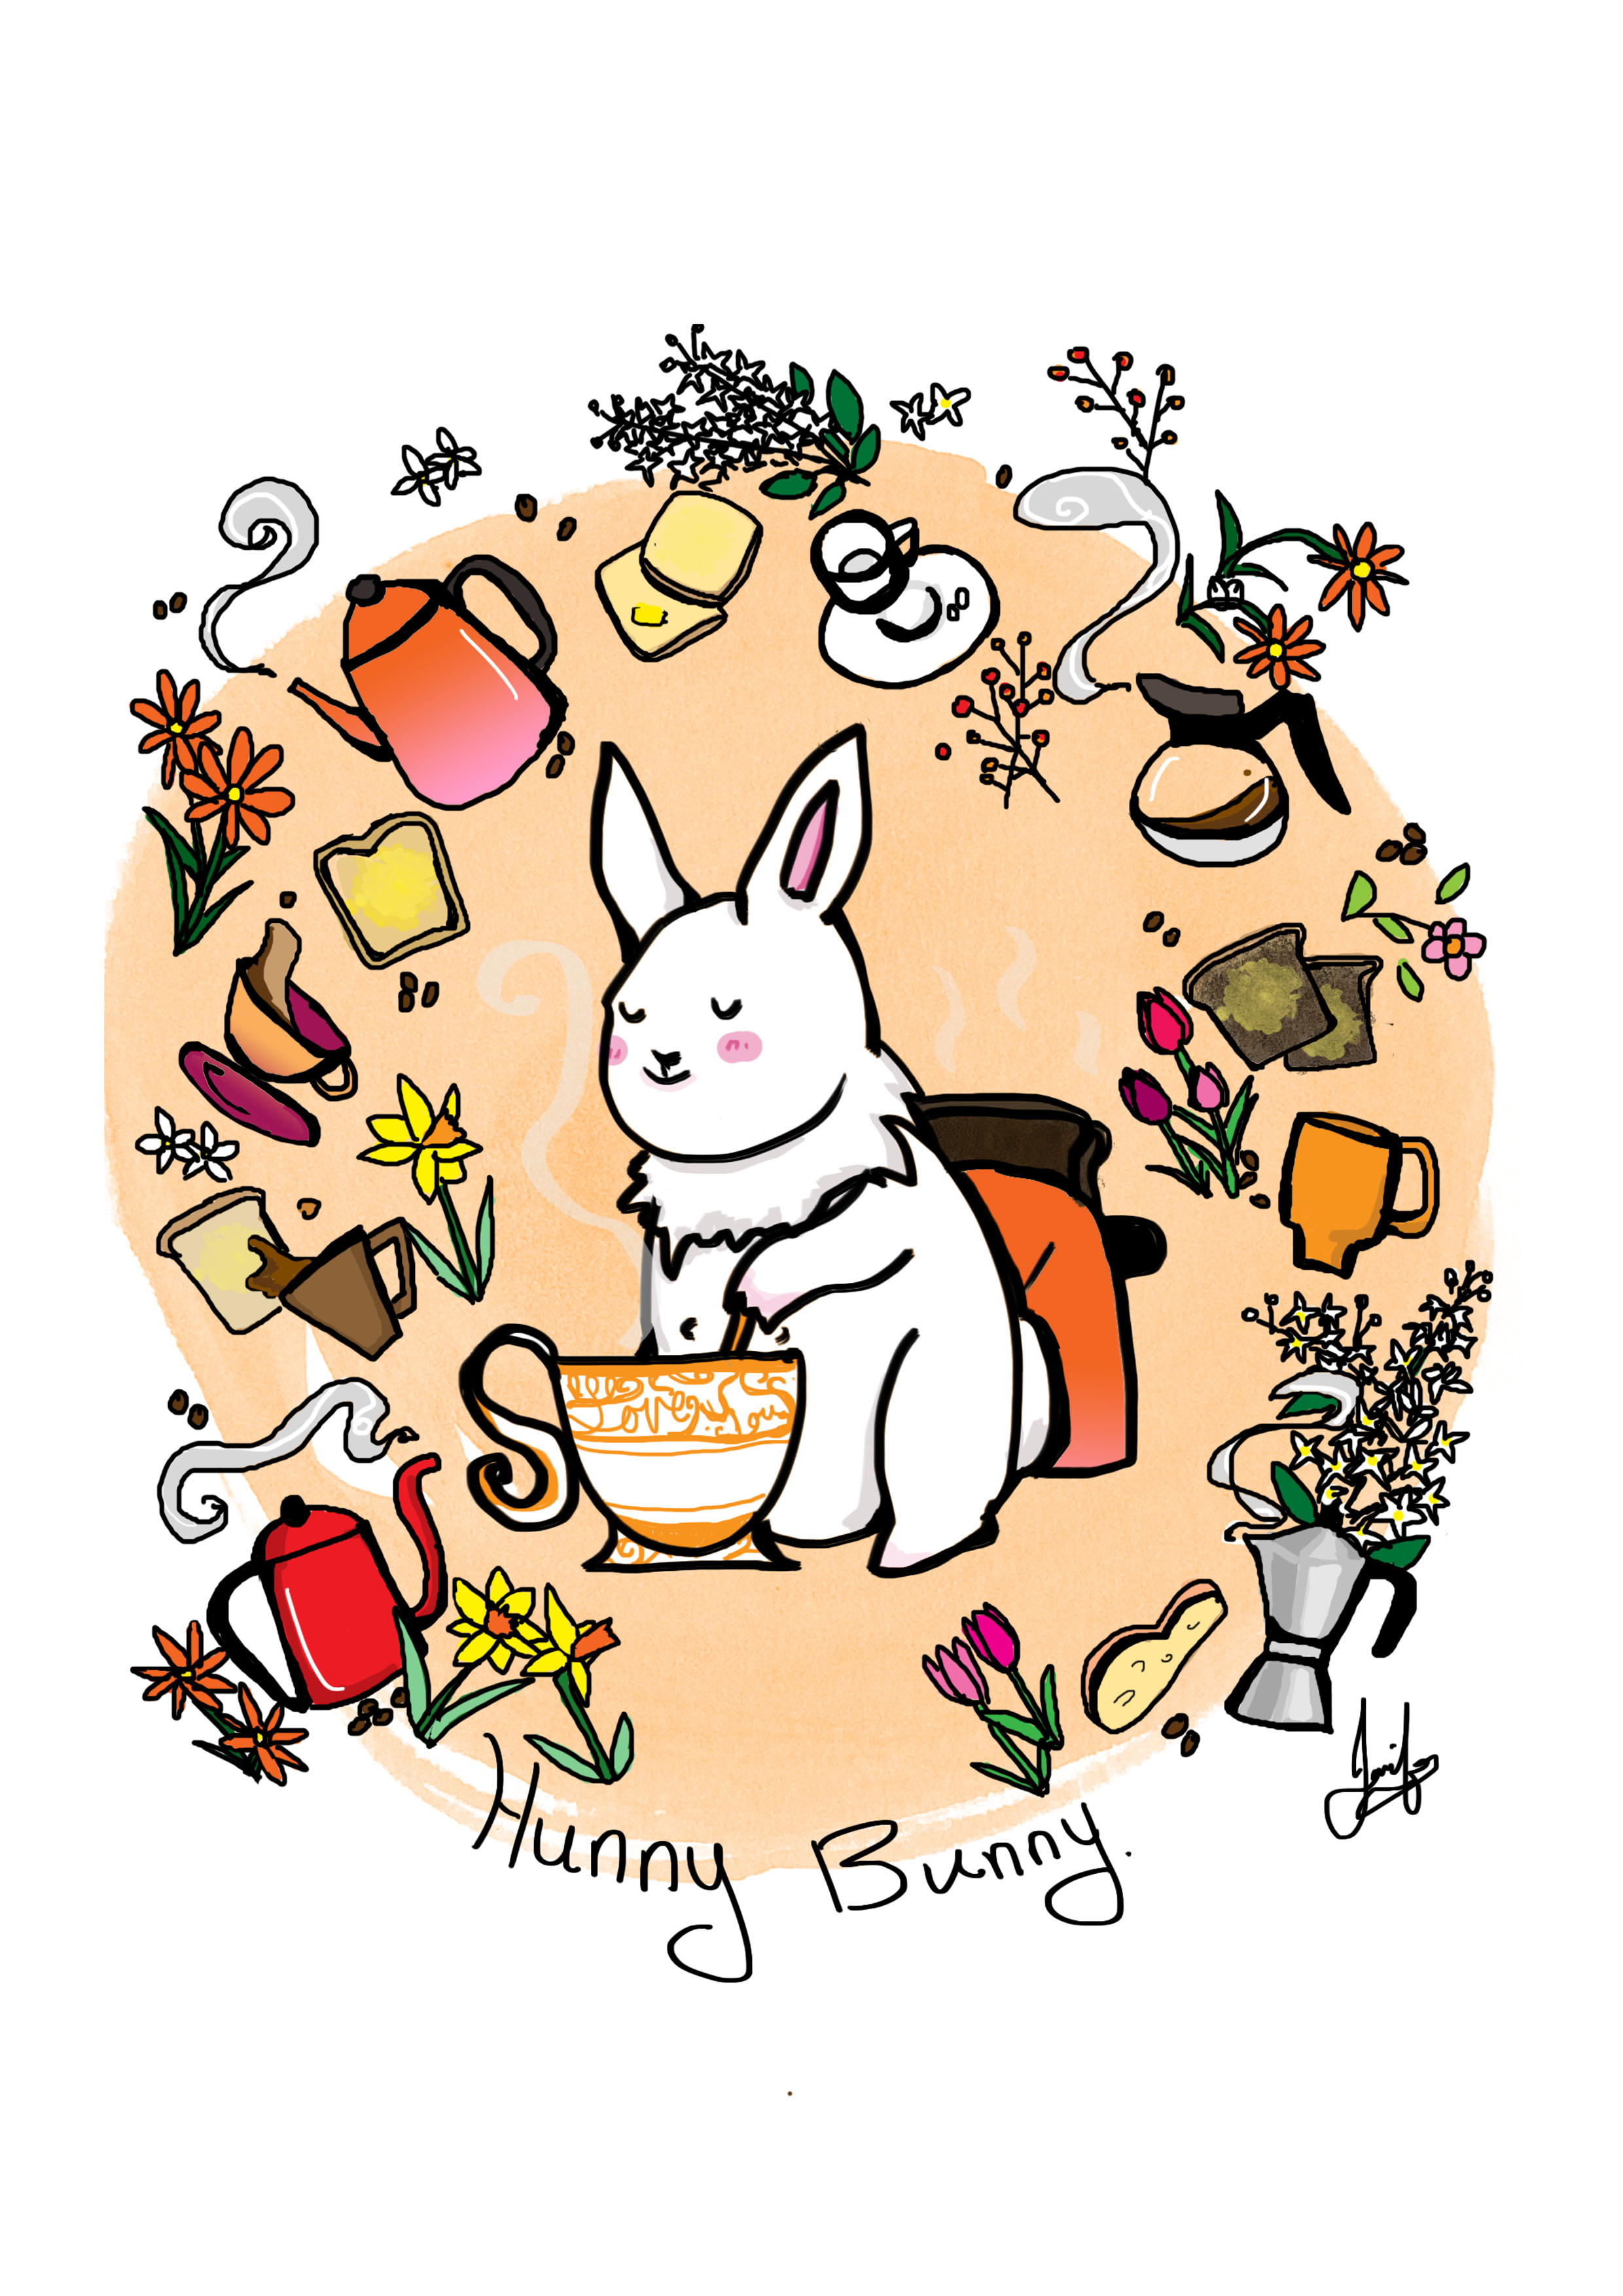 Helen's Hunny Bunny.jpg